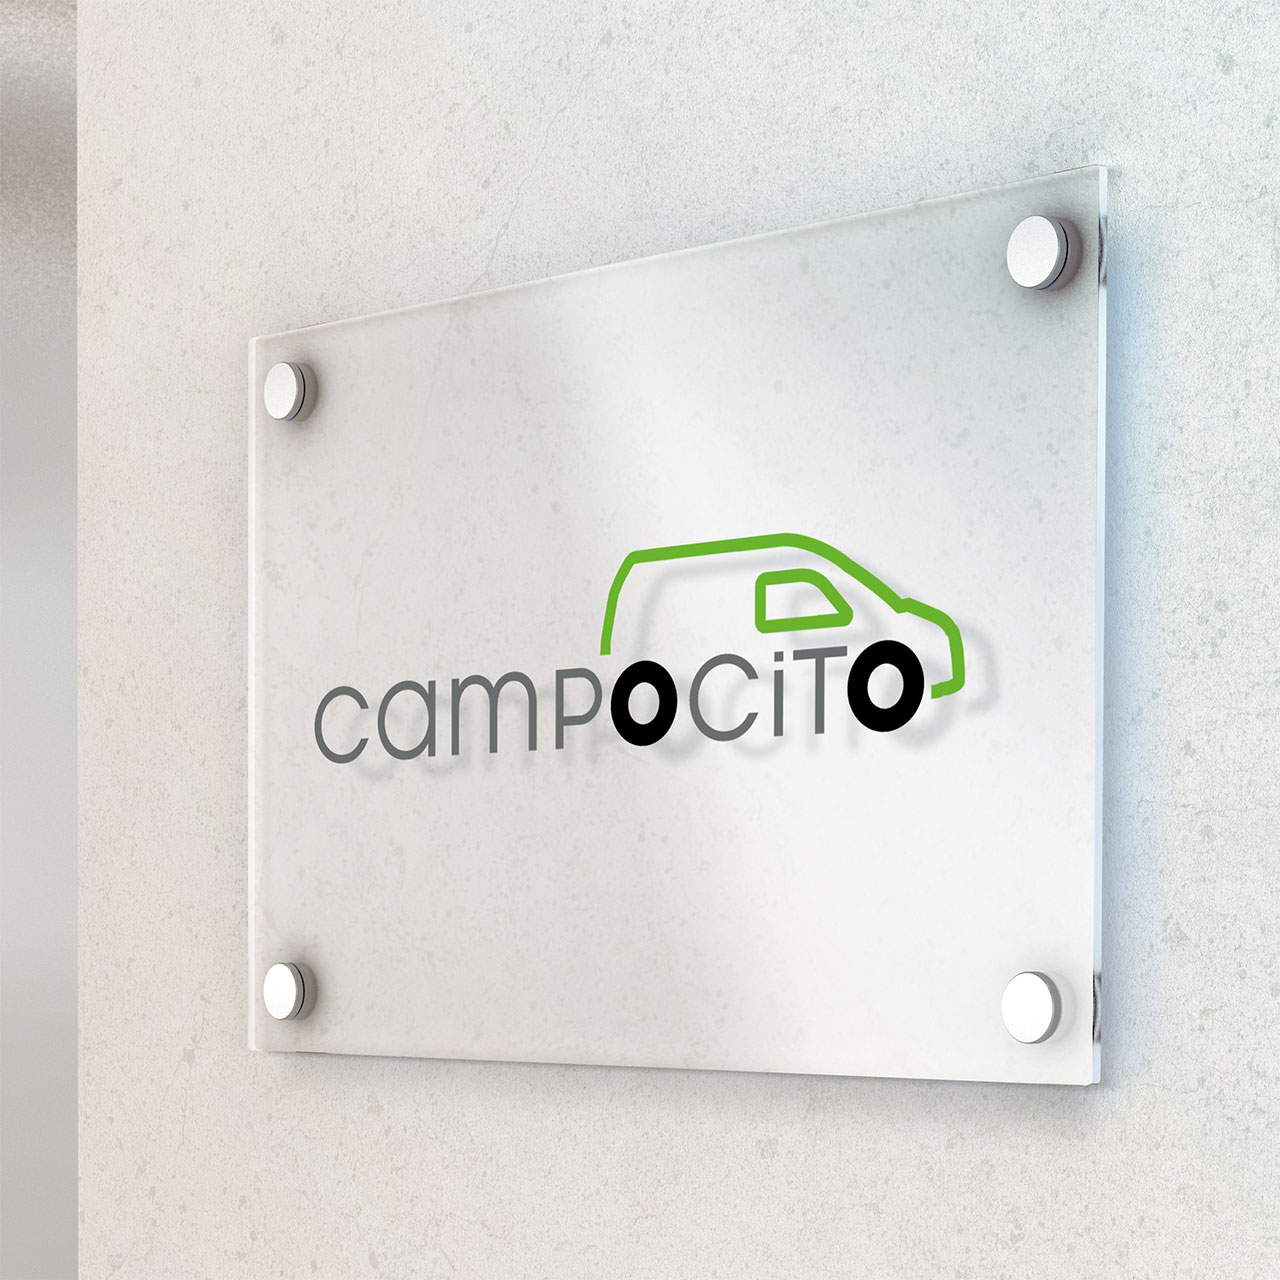 Logo der Campermarke Campocito